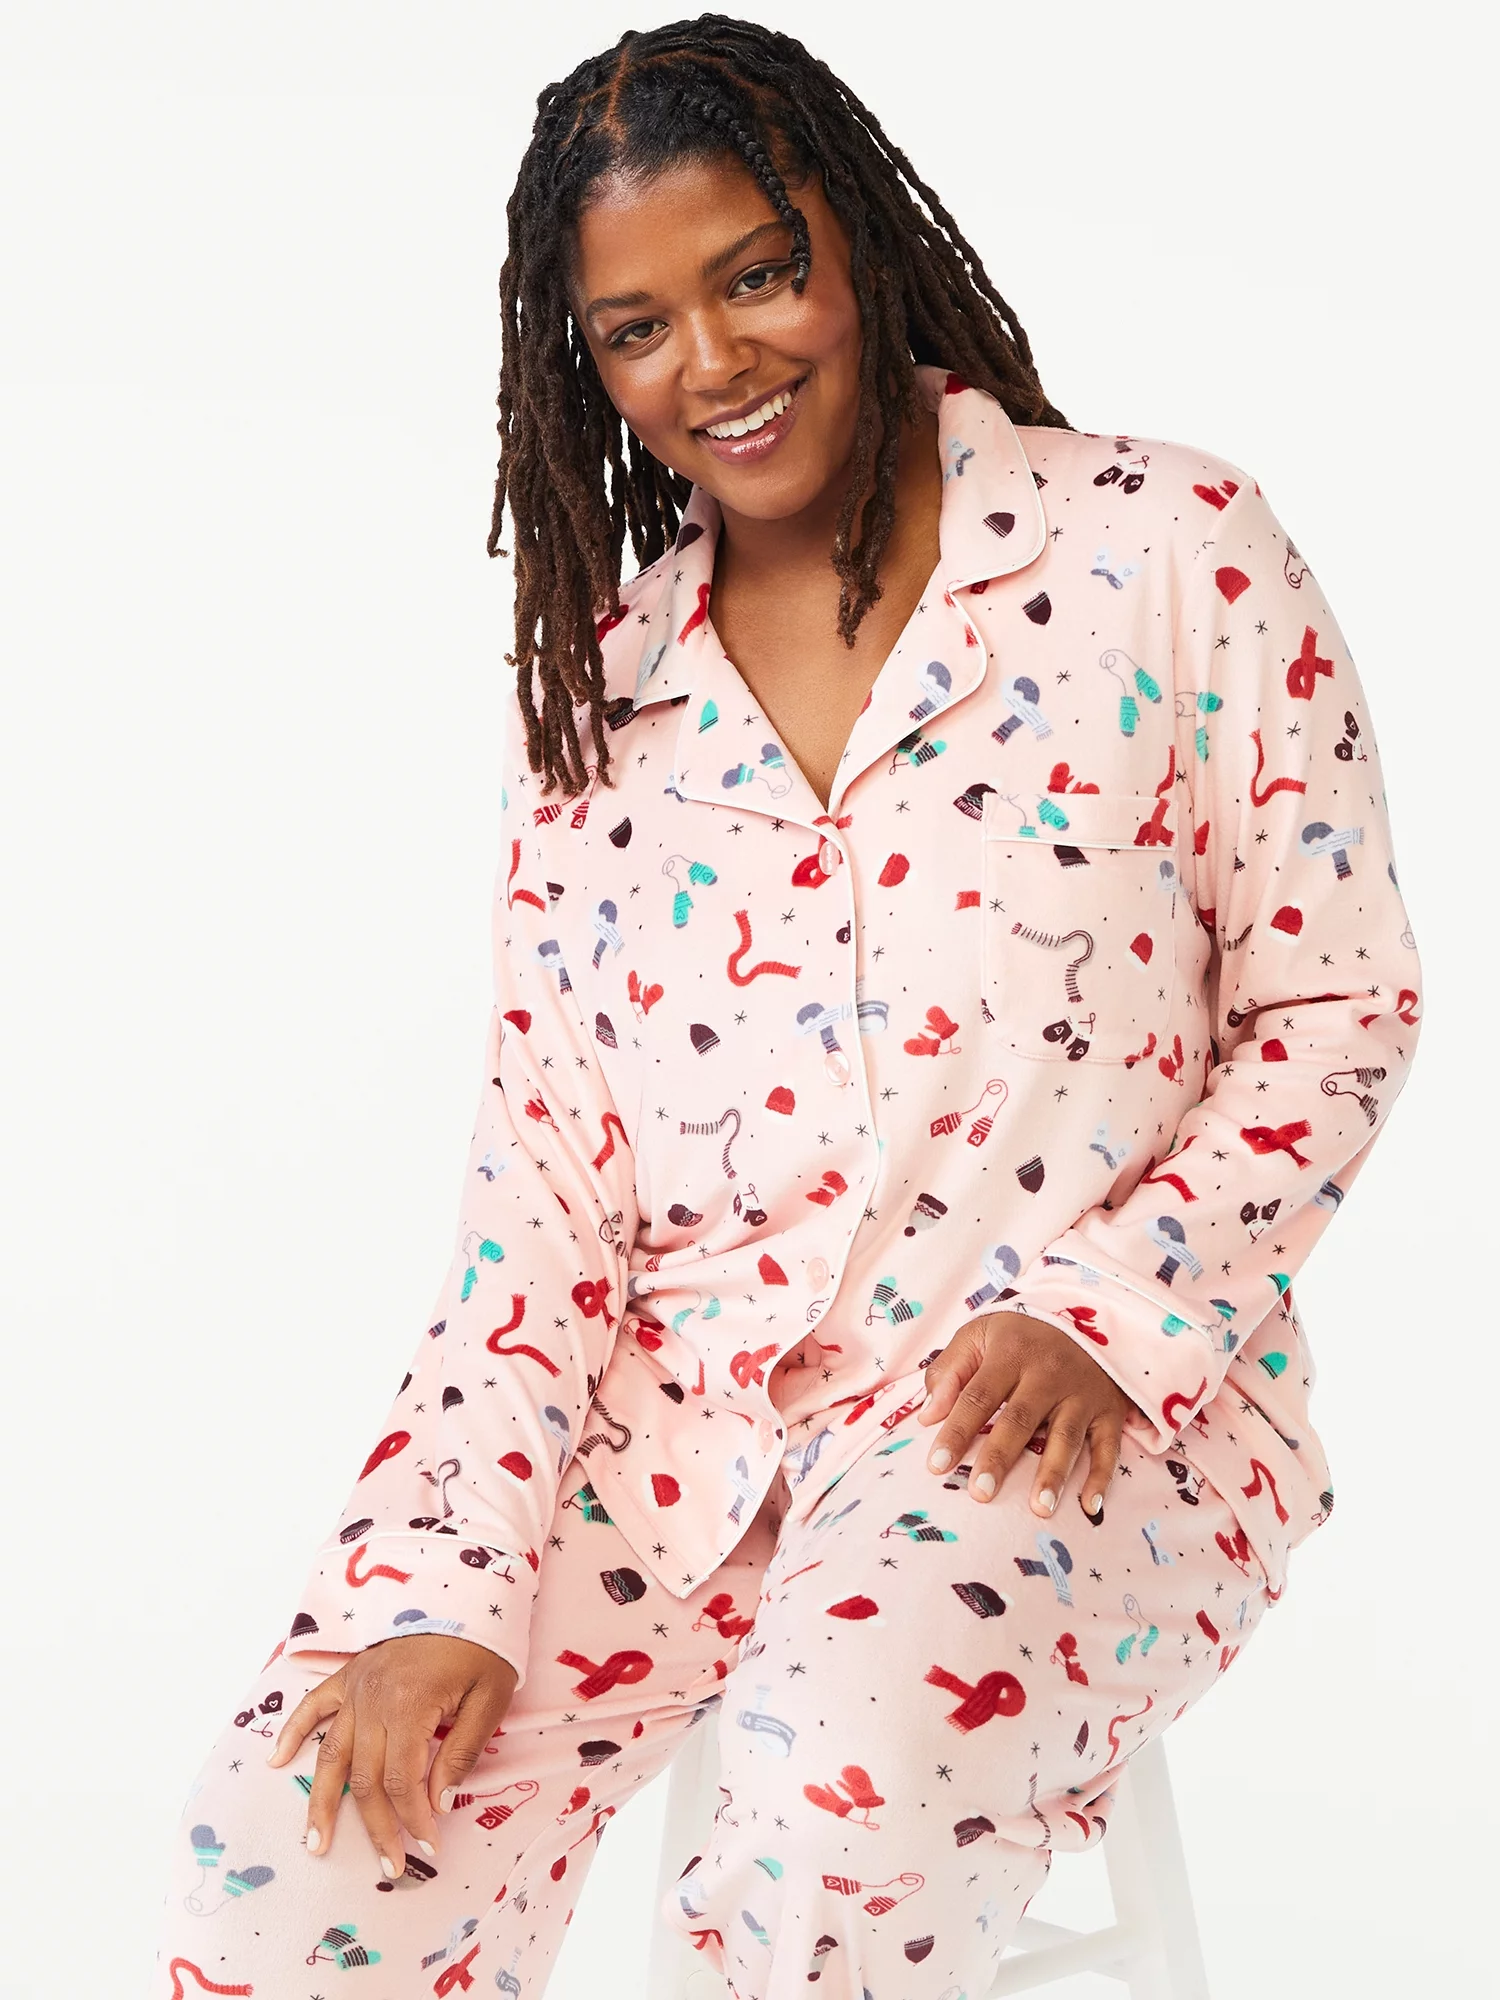 “Pajama Party: Hosting a Stylish Sleepover with Matching Pajama Sets”